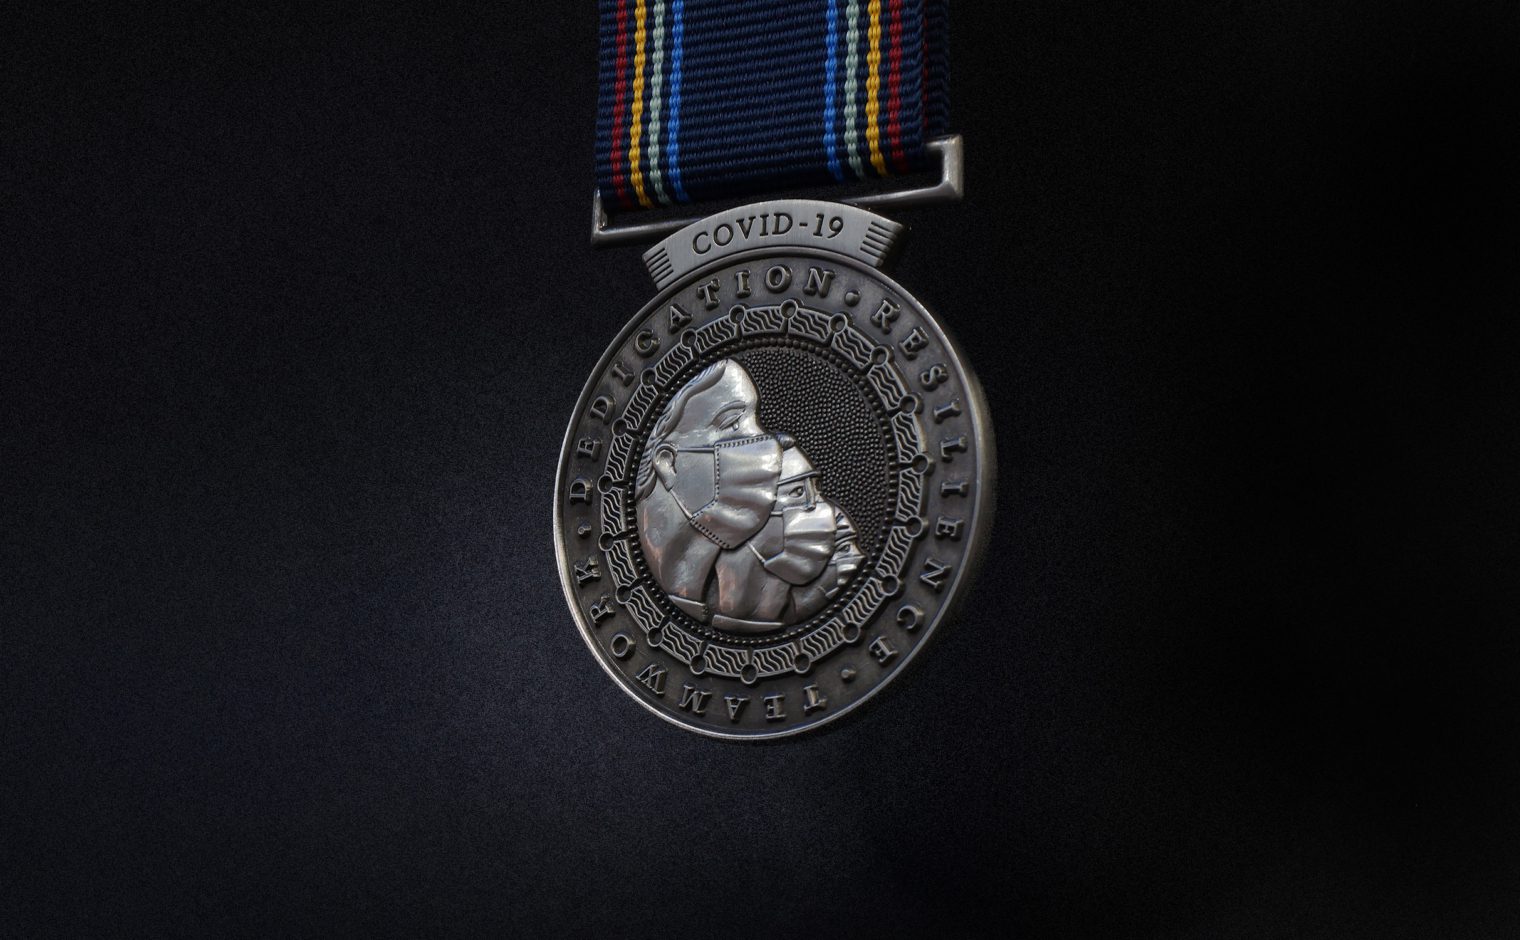 Mid Yorkshire Hospitals NHS Trust COVID-19 Medal